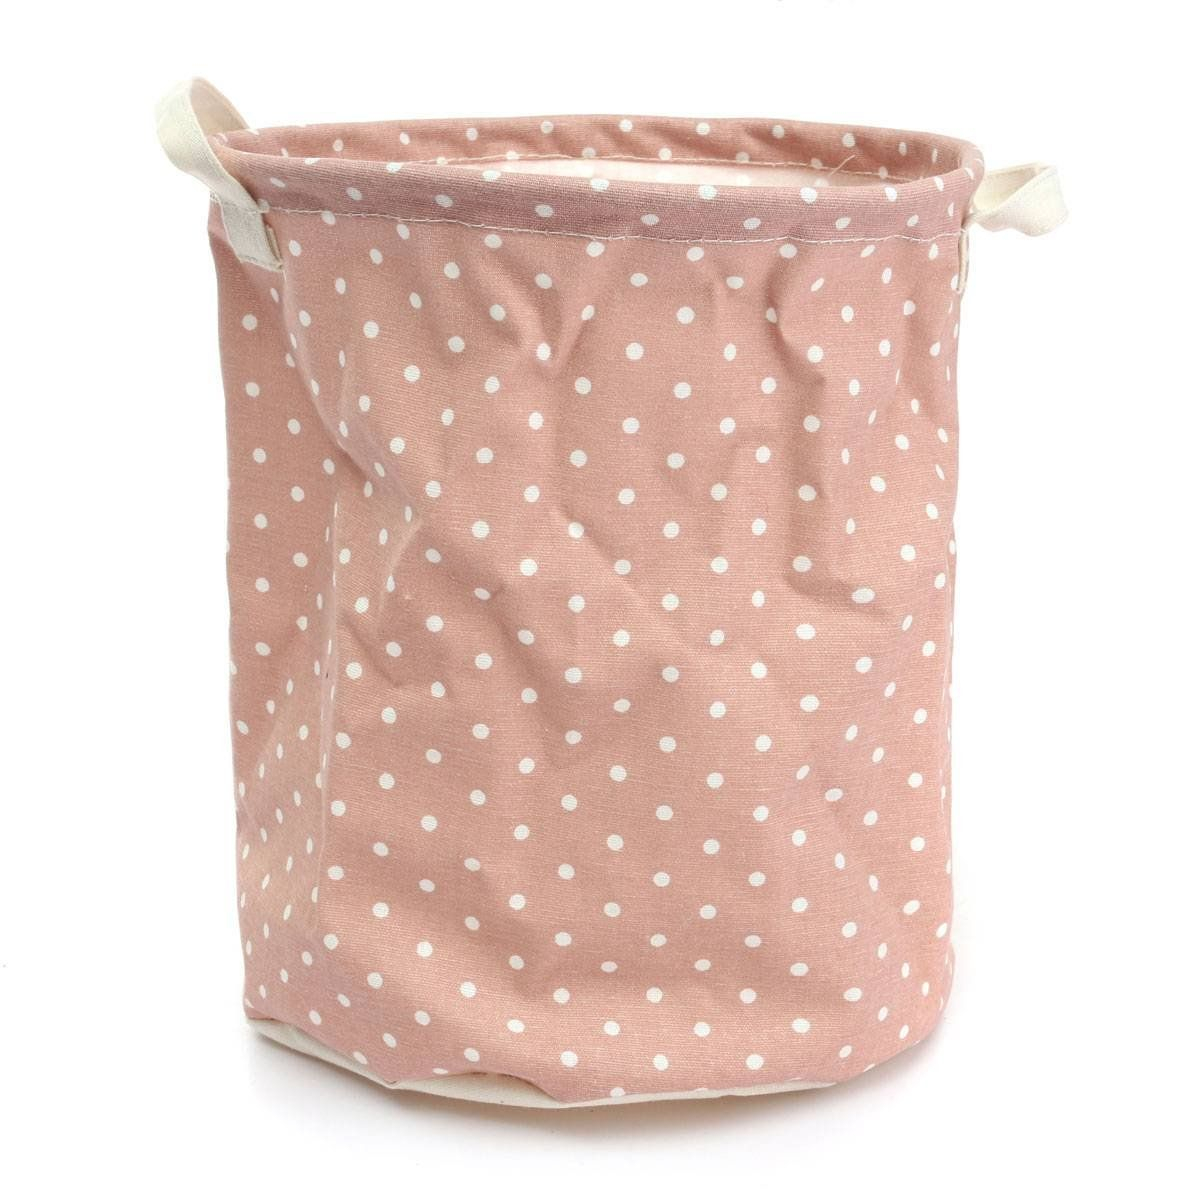 Kingso Fabric Foldable Round Laundry Basket Hamper Closet Storage throughout proportions 1200 X 1200